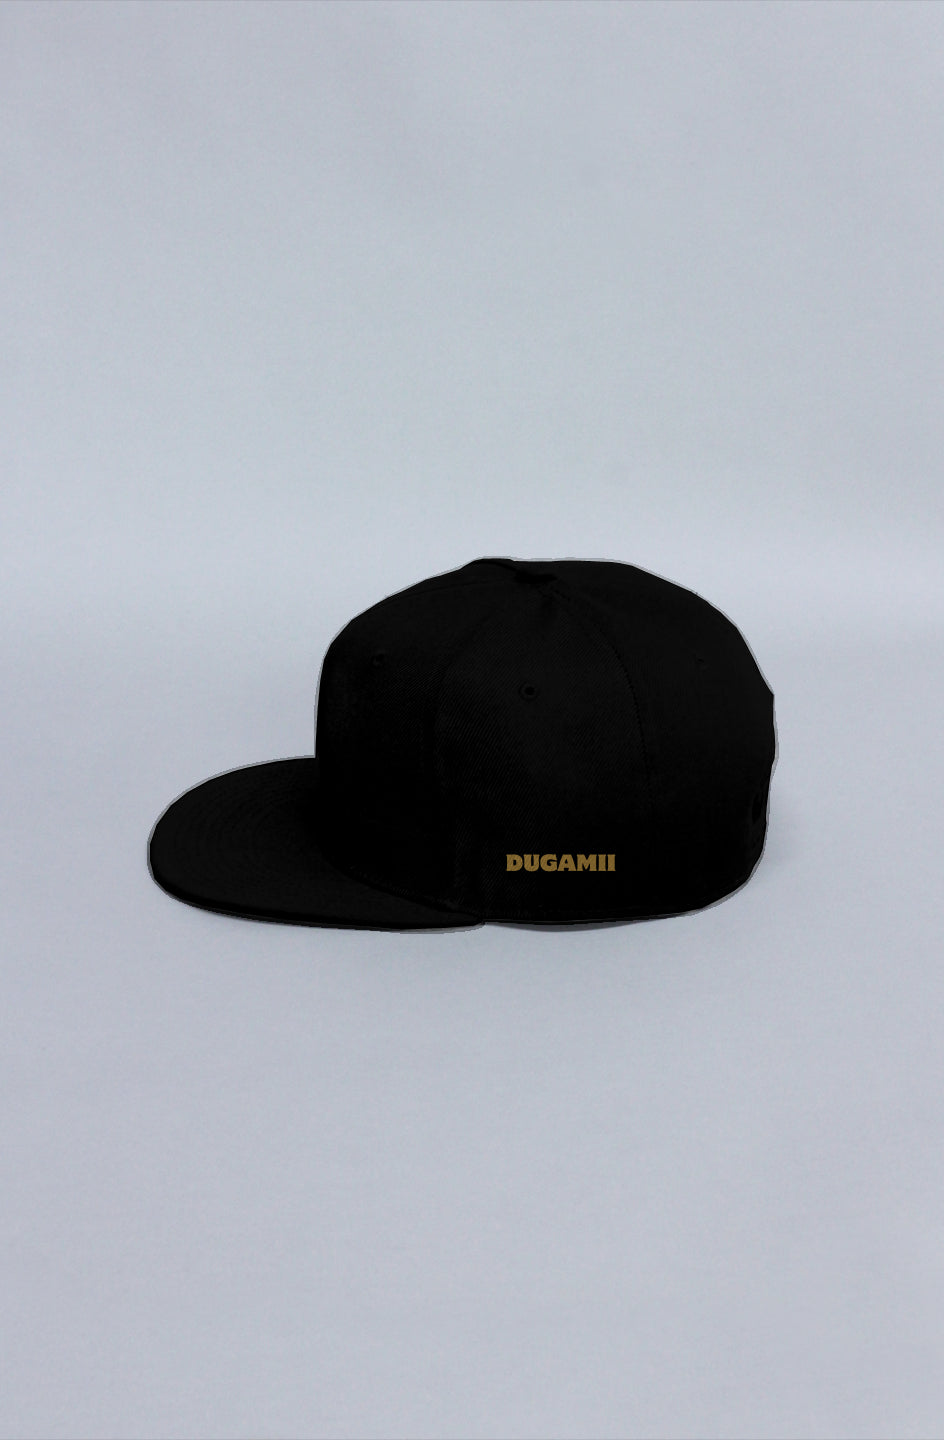 DuGamii "Limited Edition" Snapback Hats